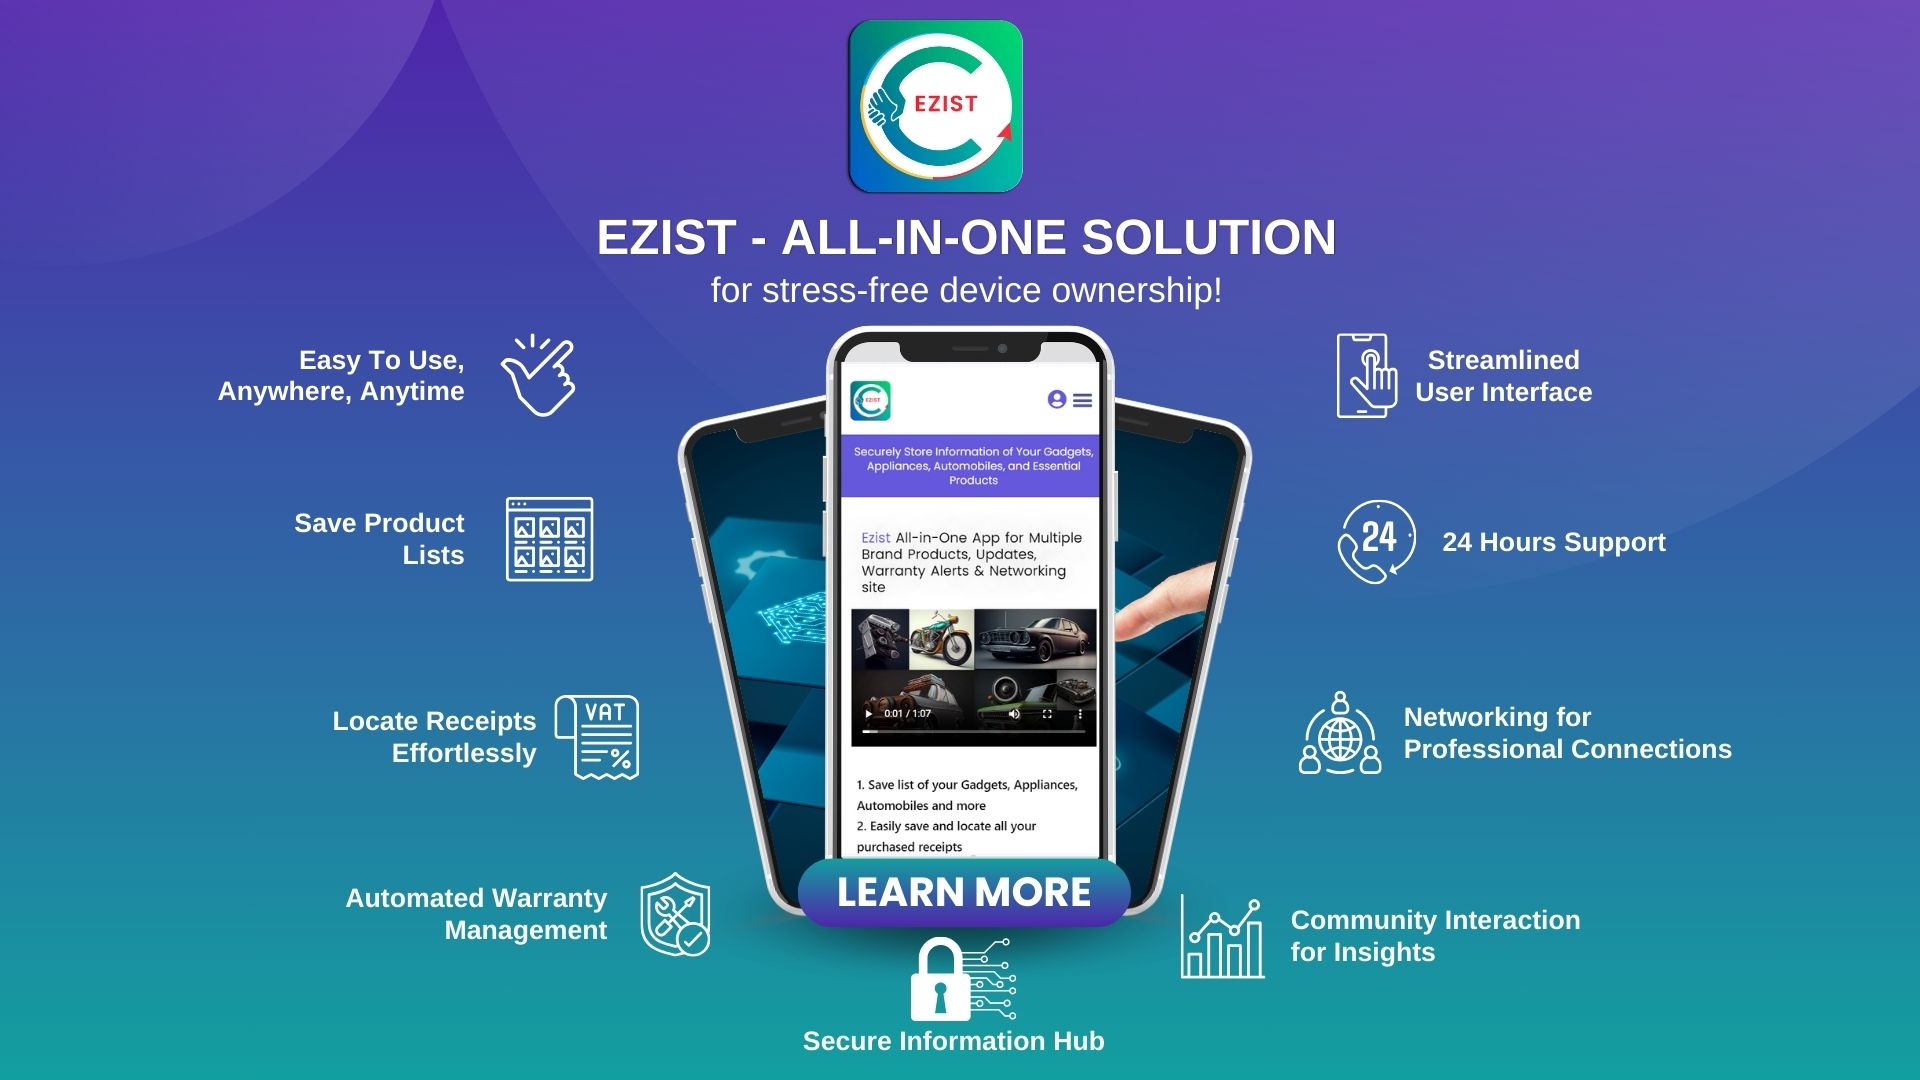 Elevating Customer Satisfaction and Power of Ezist App